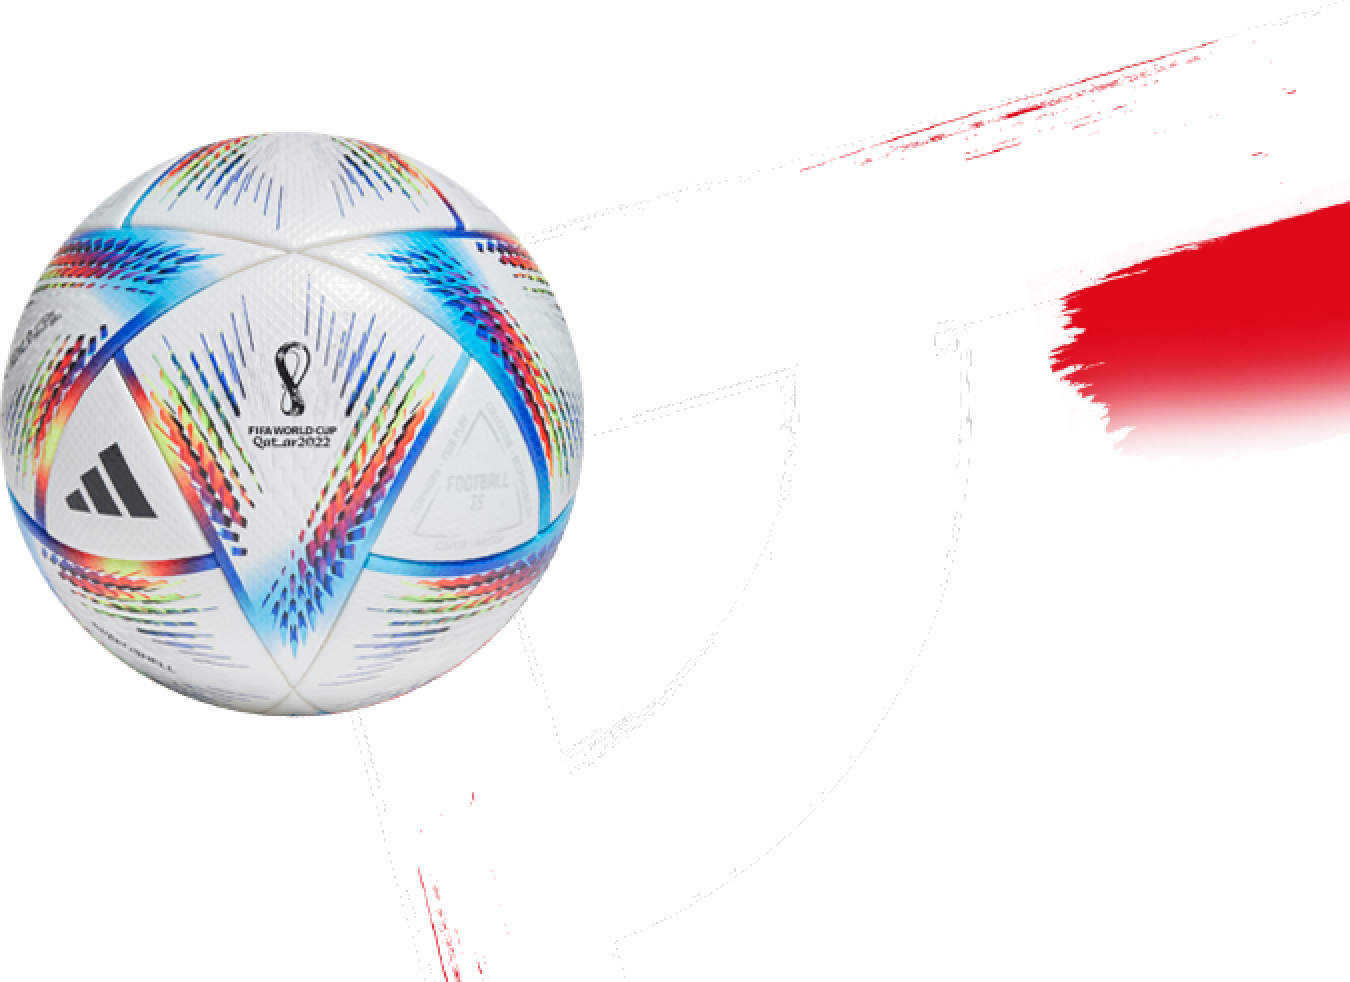 FIFA World Cup Qatar 2022 soccer ball decoration